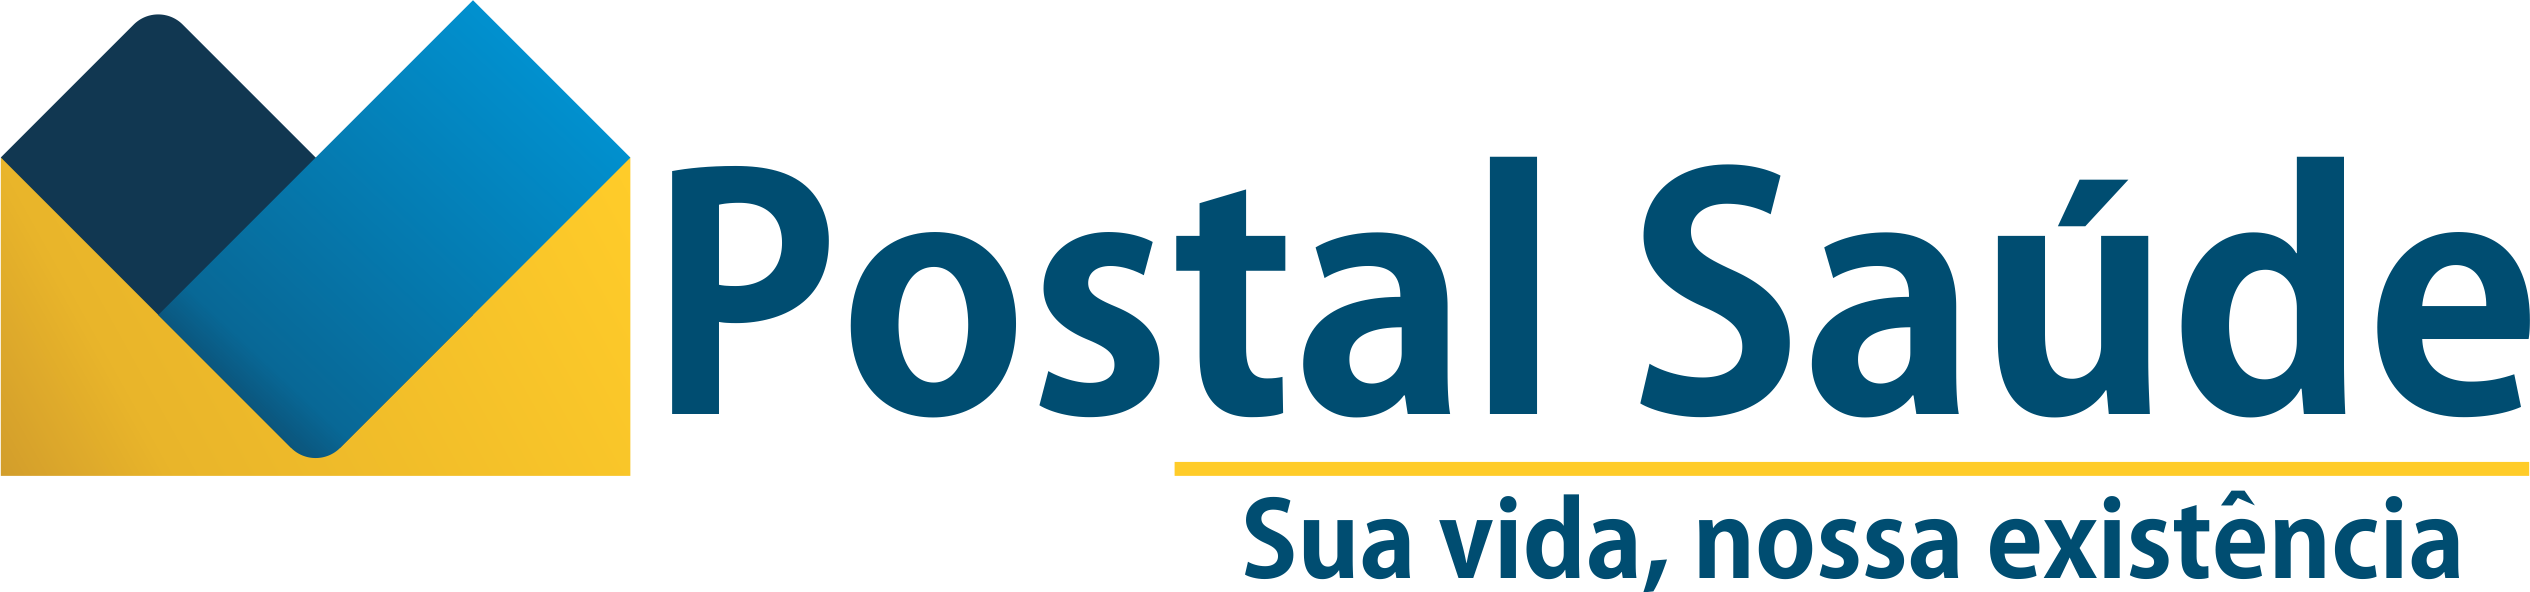 Postal_logo